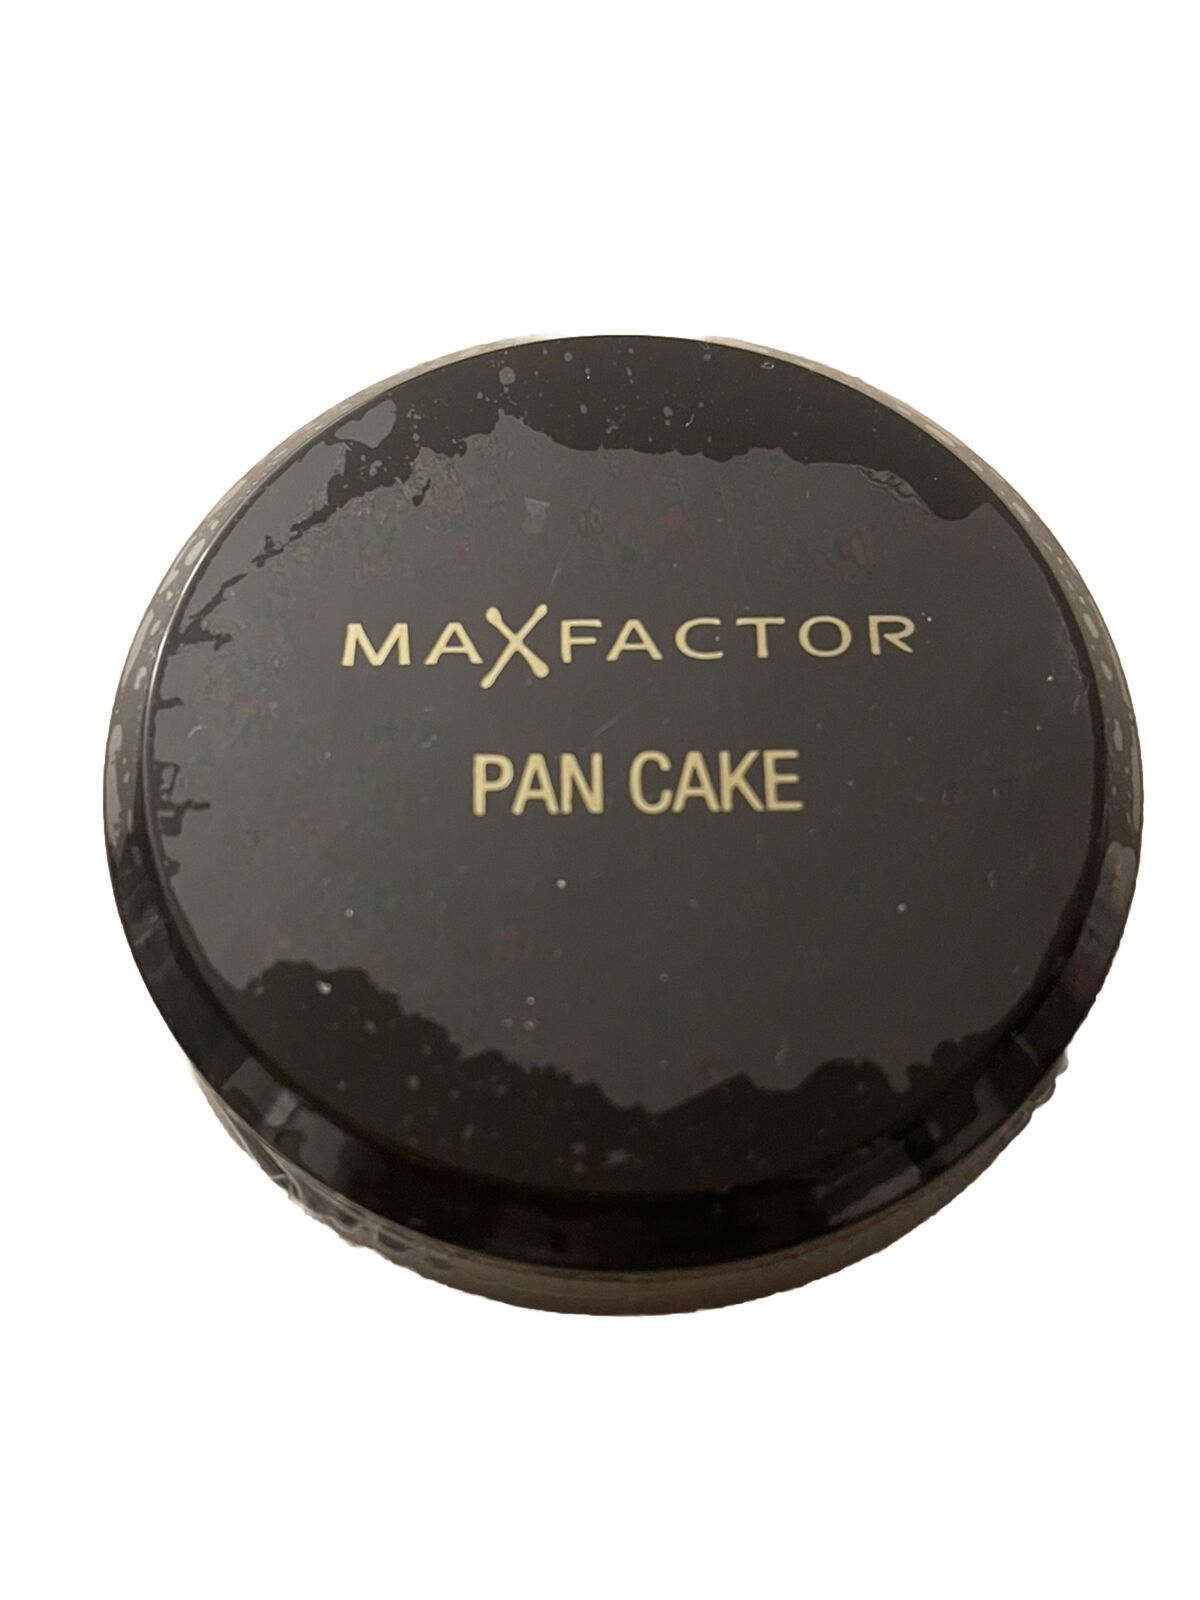 MAX FACTOR PAN-CAKE MAKEUP / FOUNDATION #109 Tan No. 1 - BRAND NEW (1 PANCAKE)